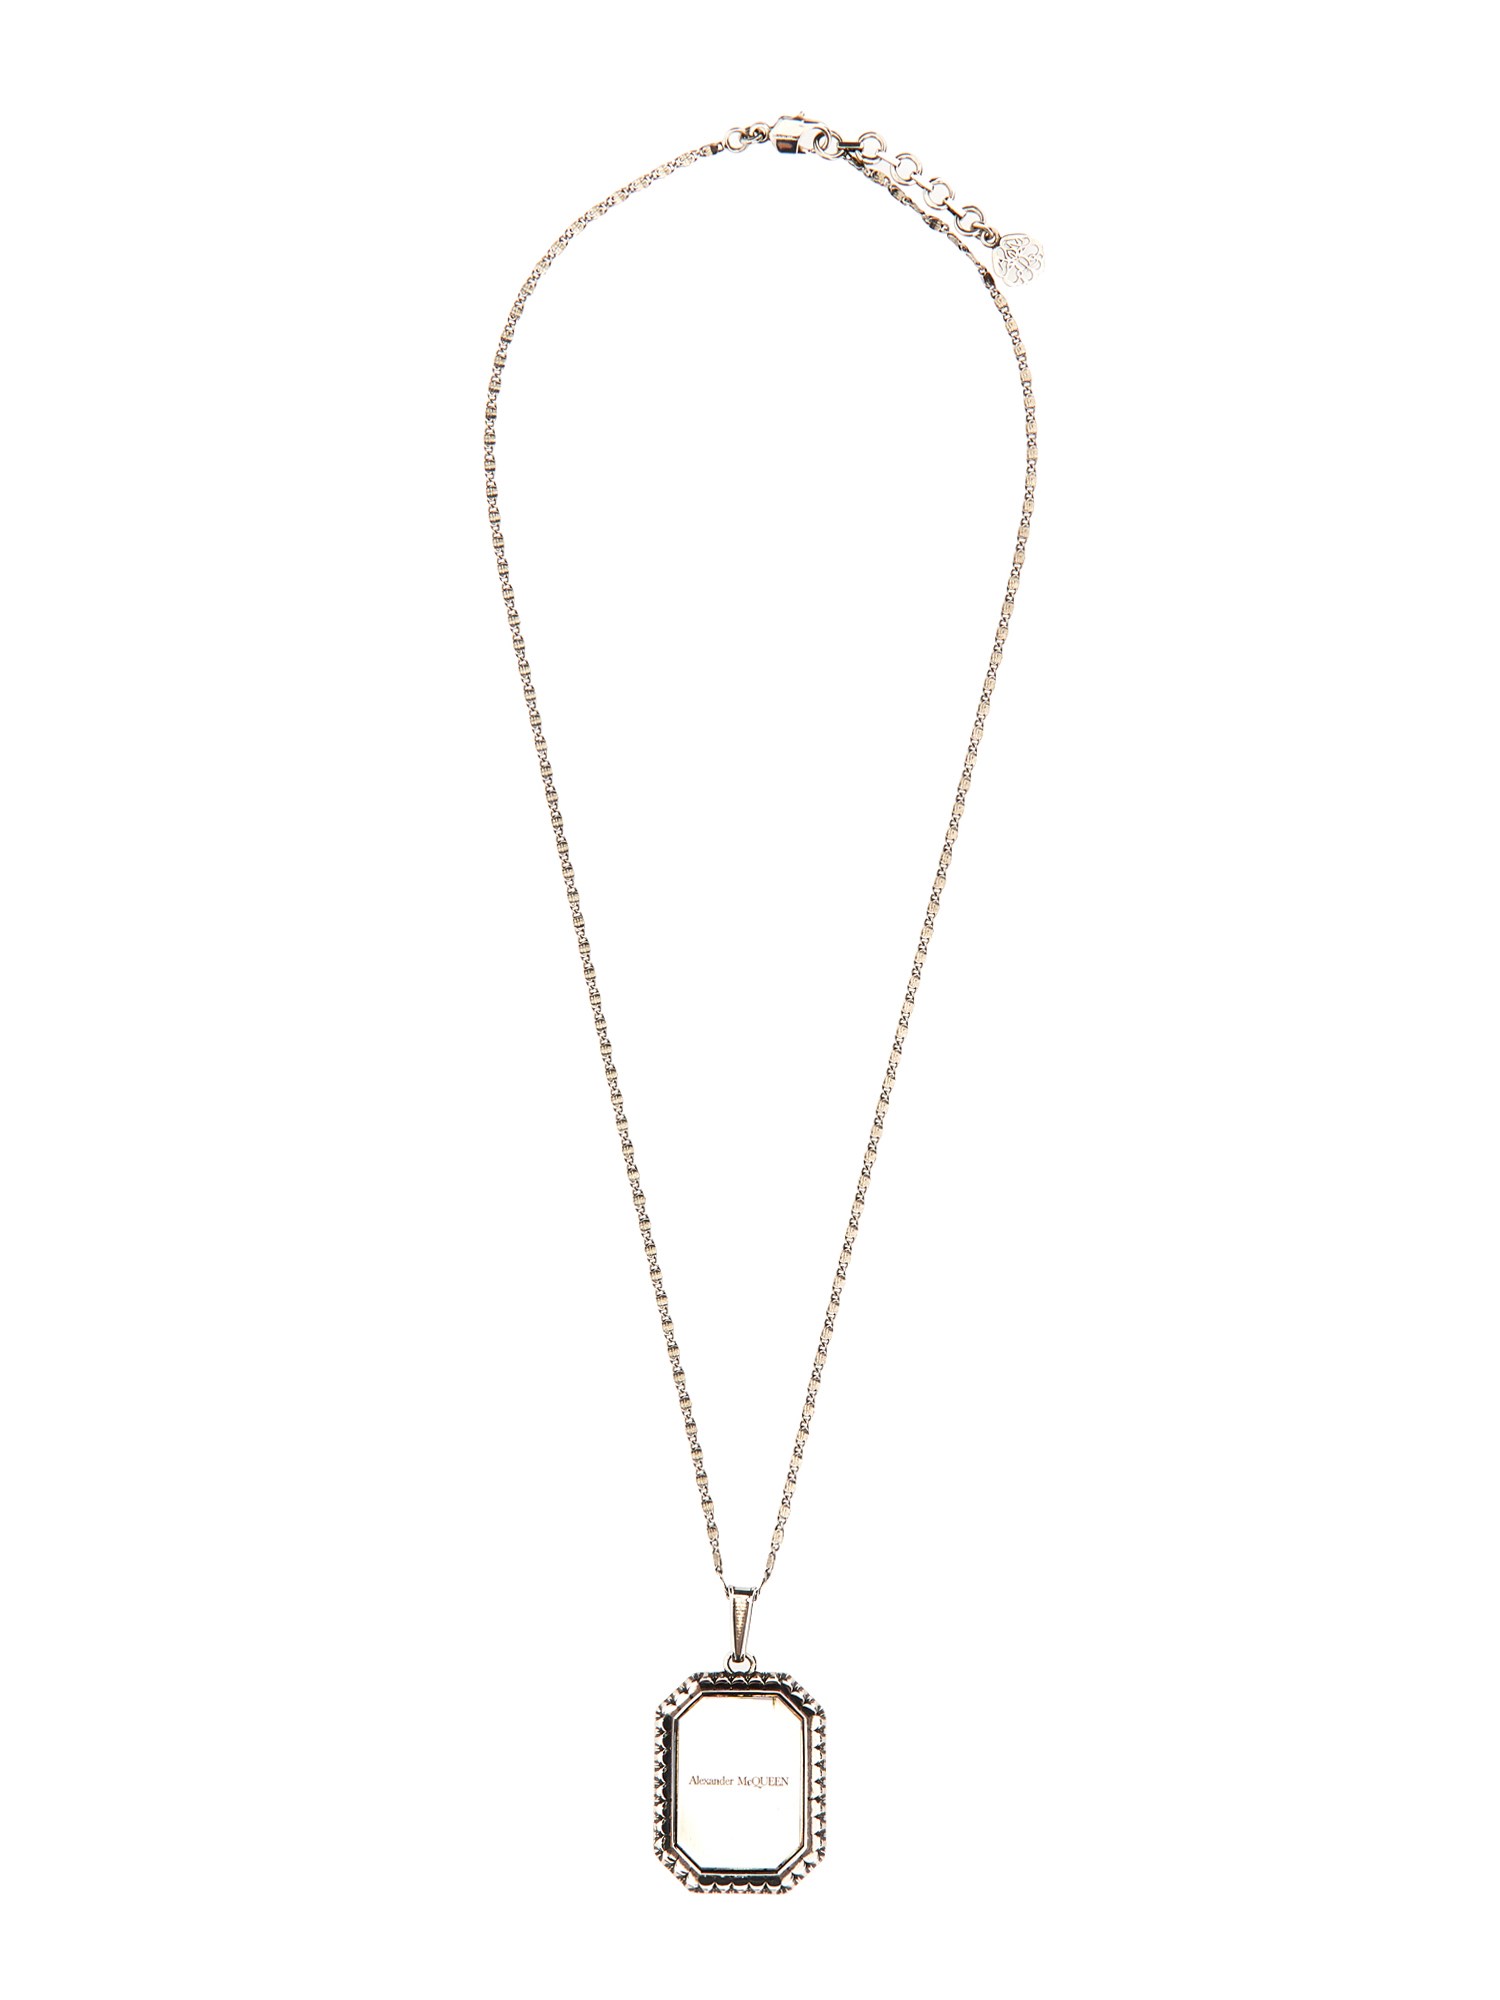 alexander mcqueen necklace with logo pendant